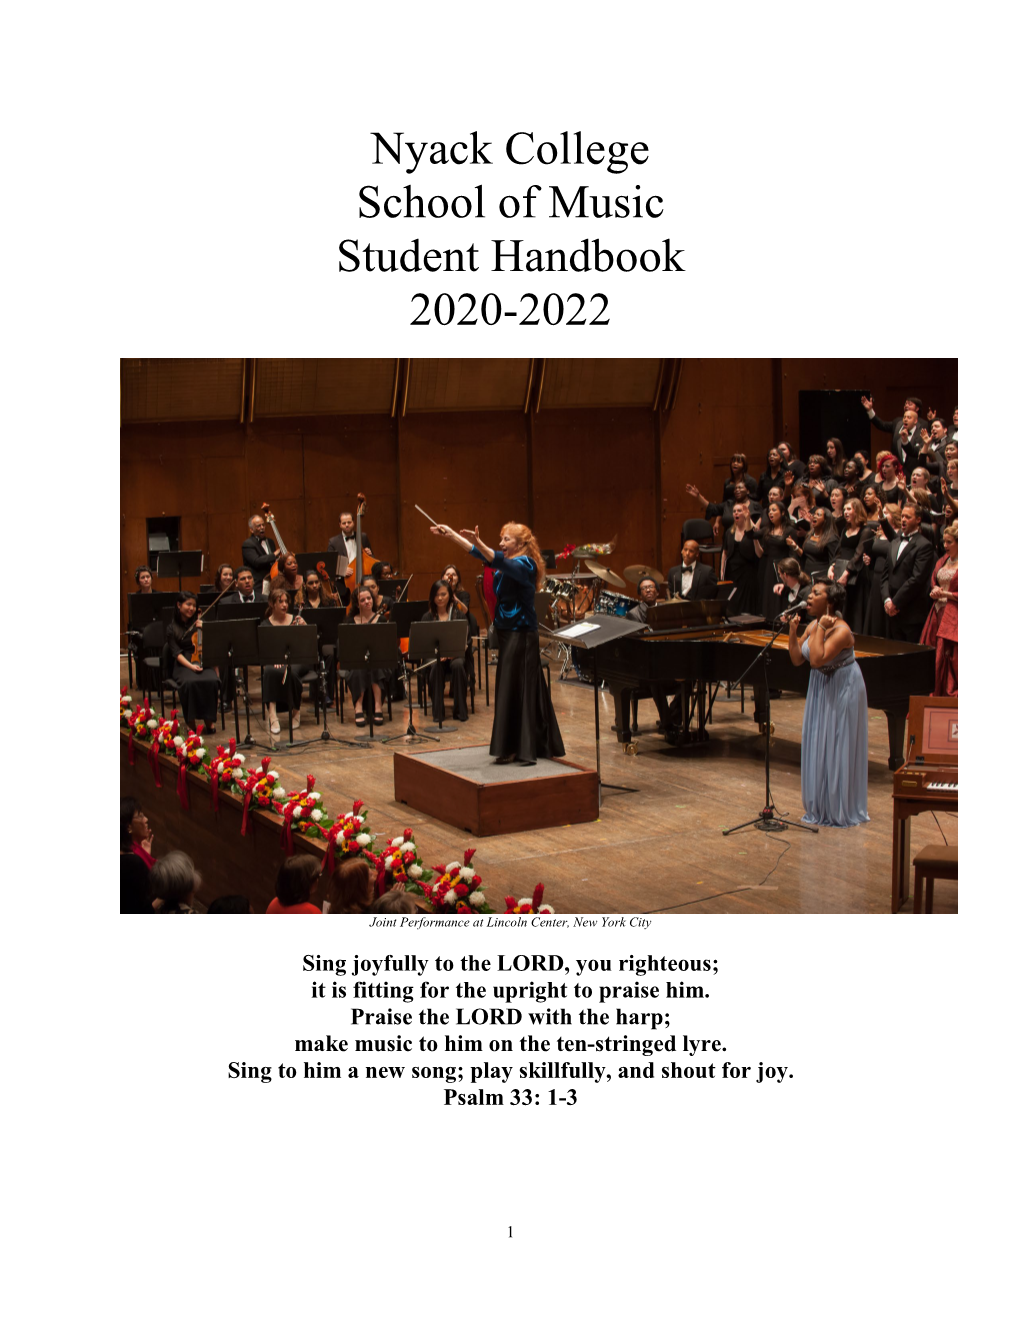 Nyack College School of Music Student Handbook 2020-2022